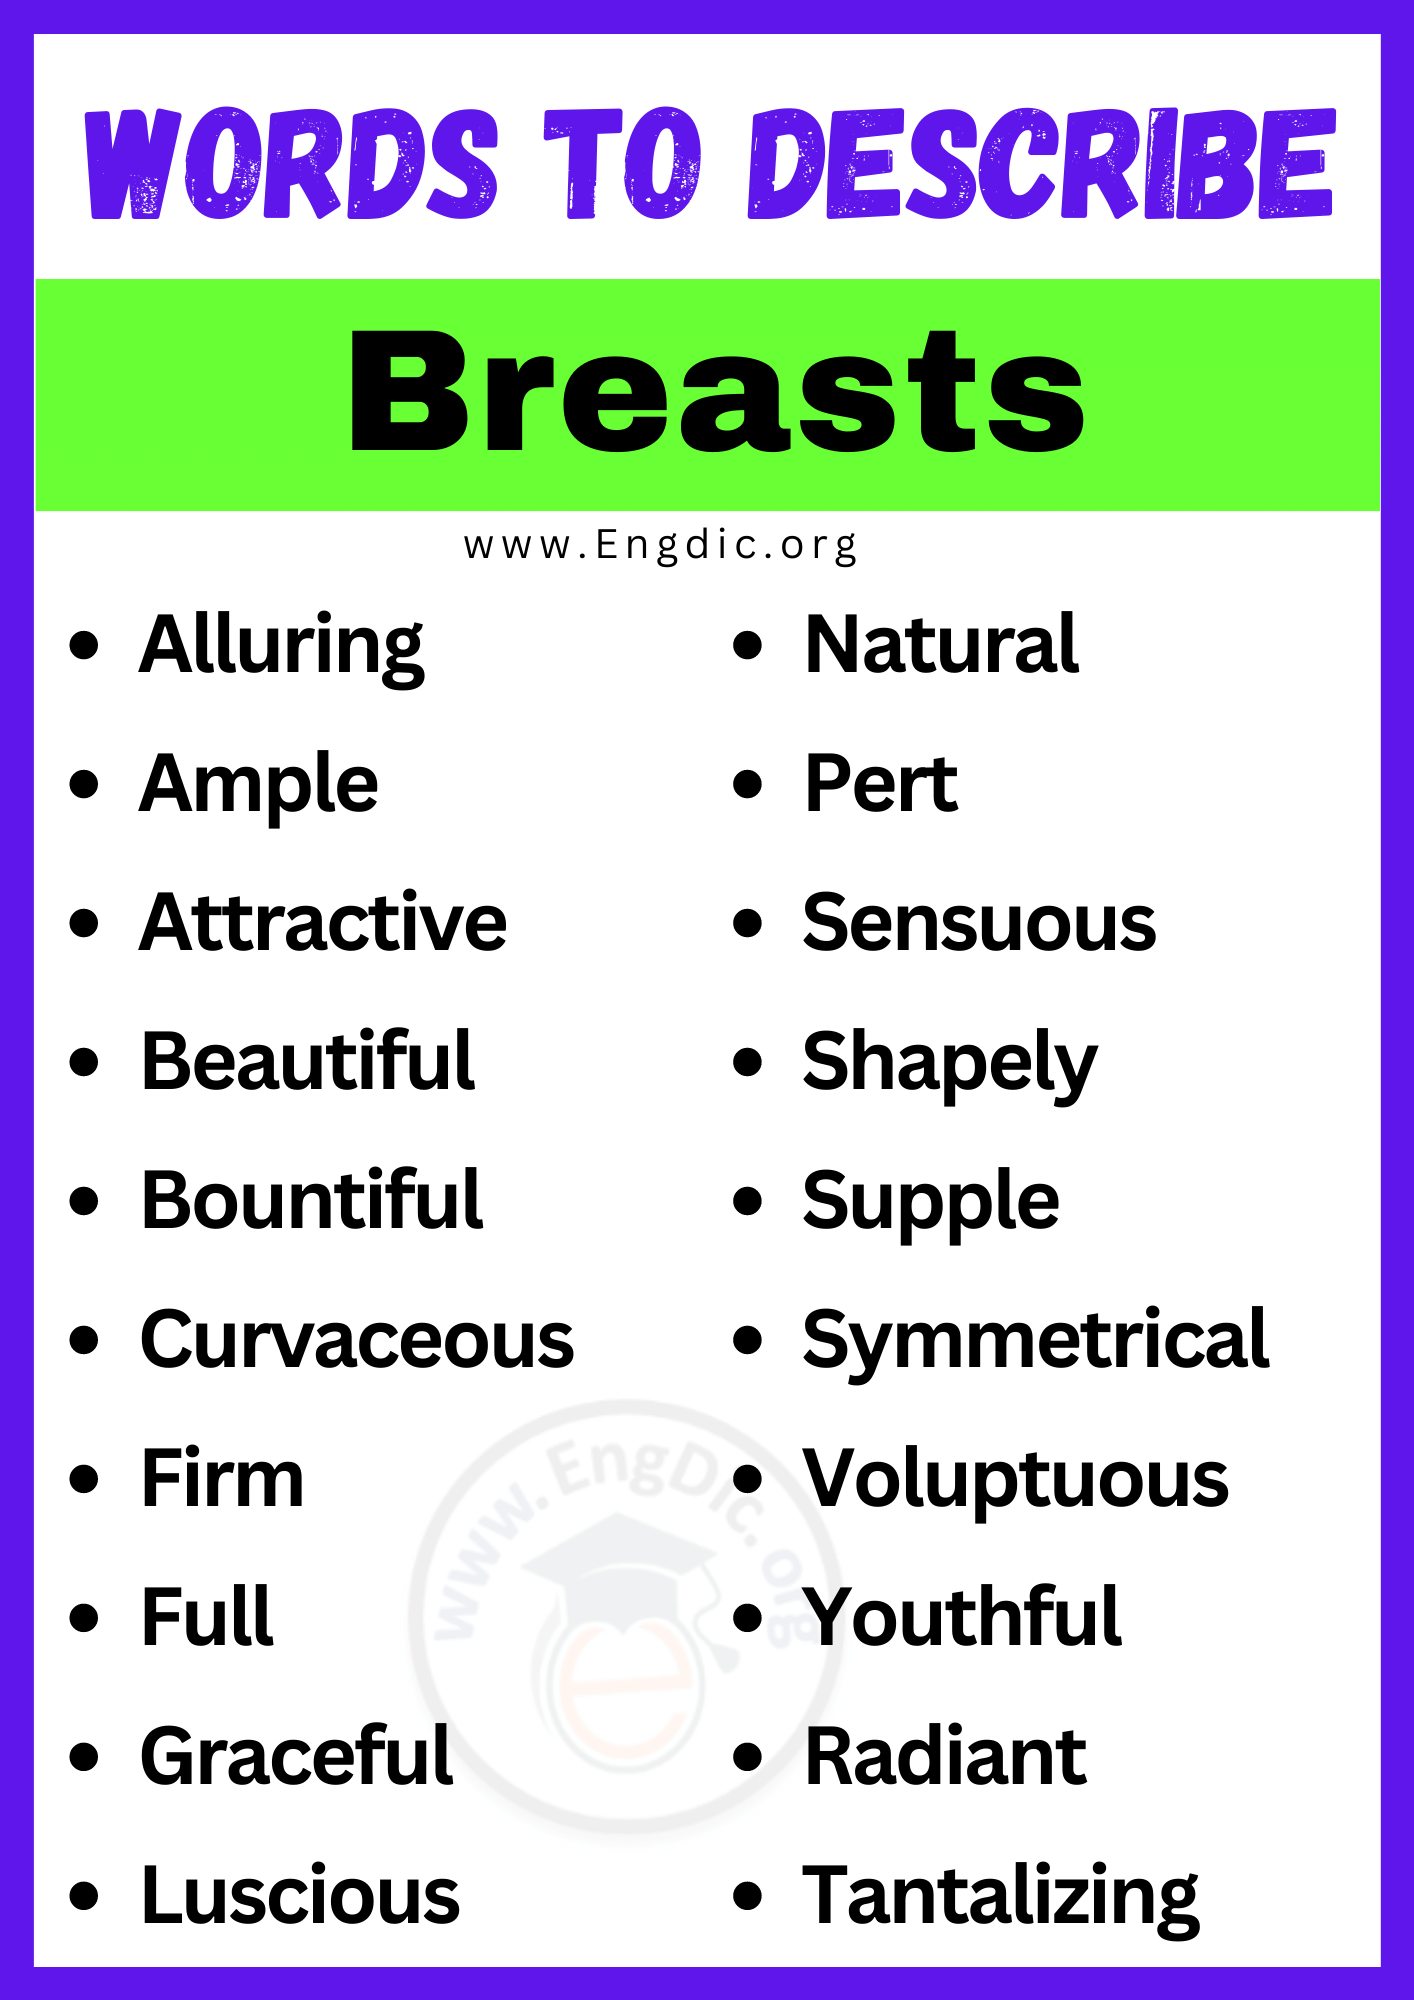 Words to Describe Breasts